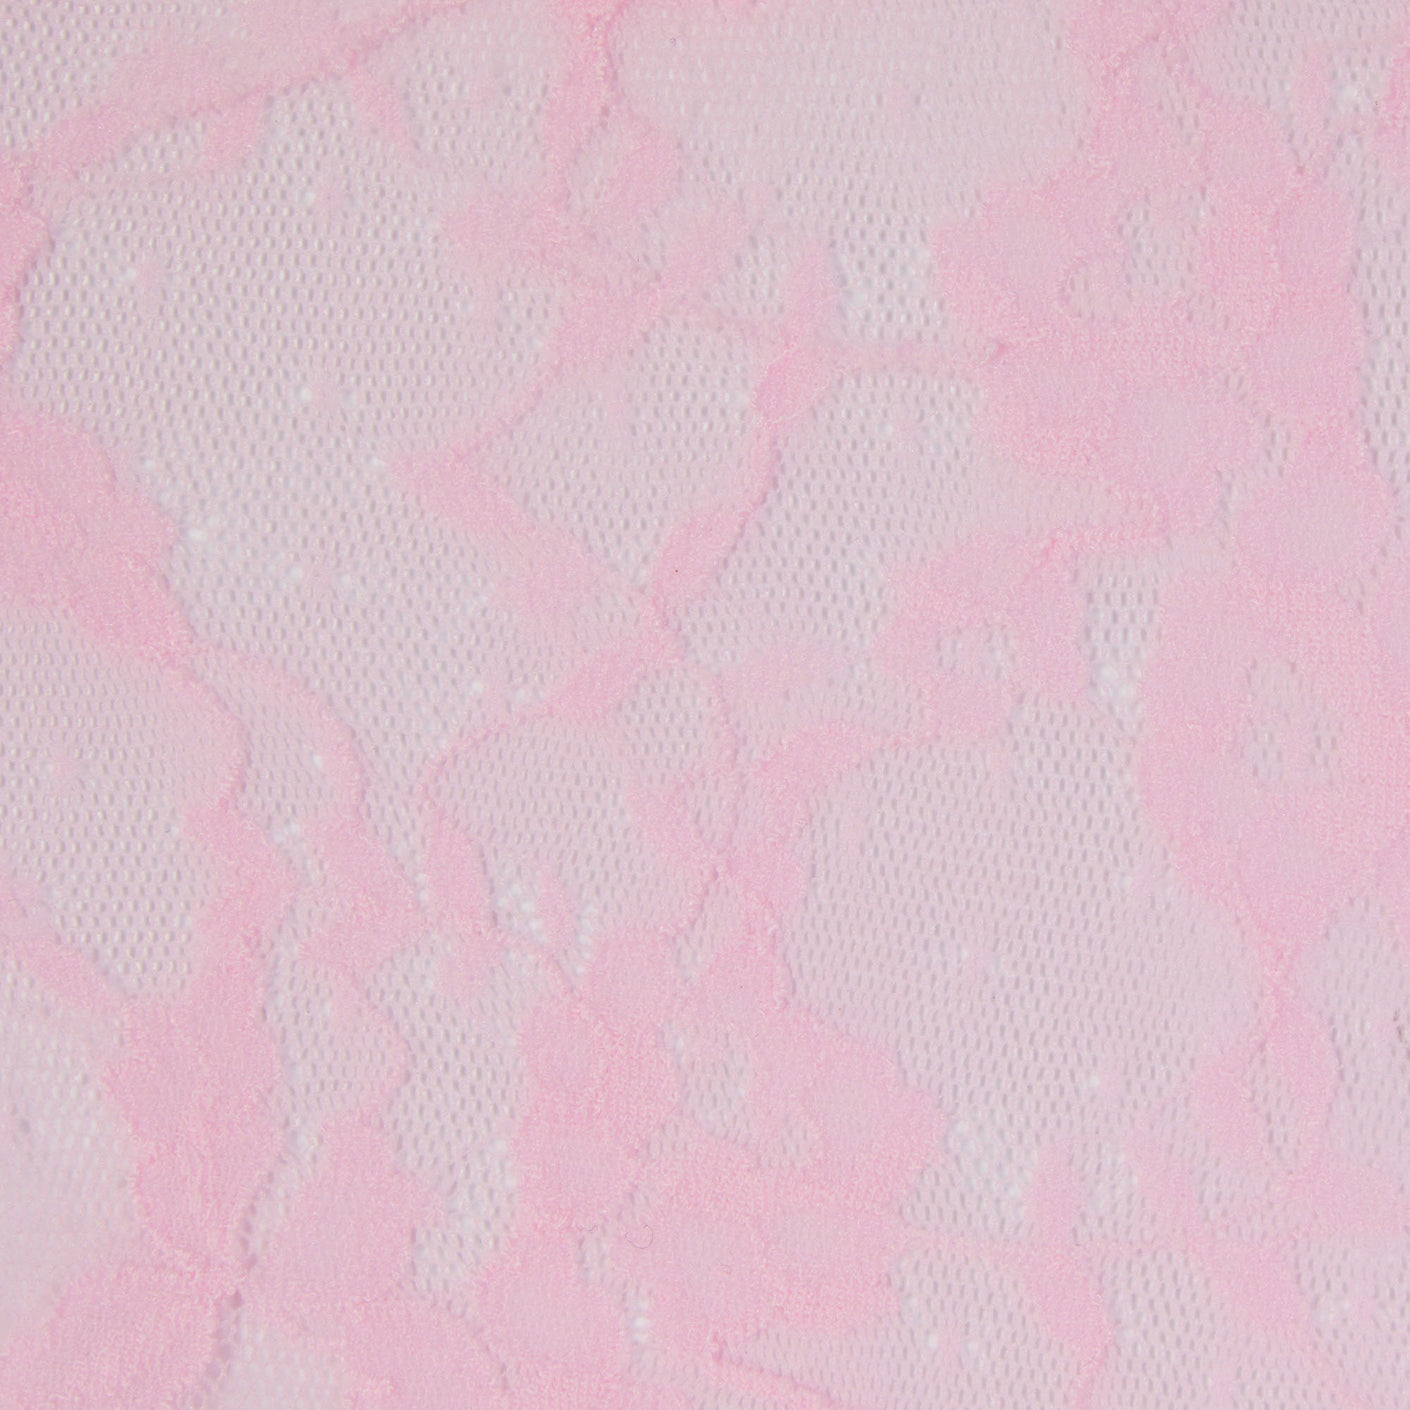 Light Pink Stretch Lace Trim 1 1/4